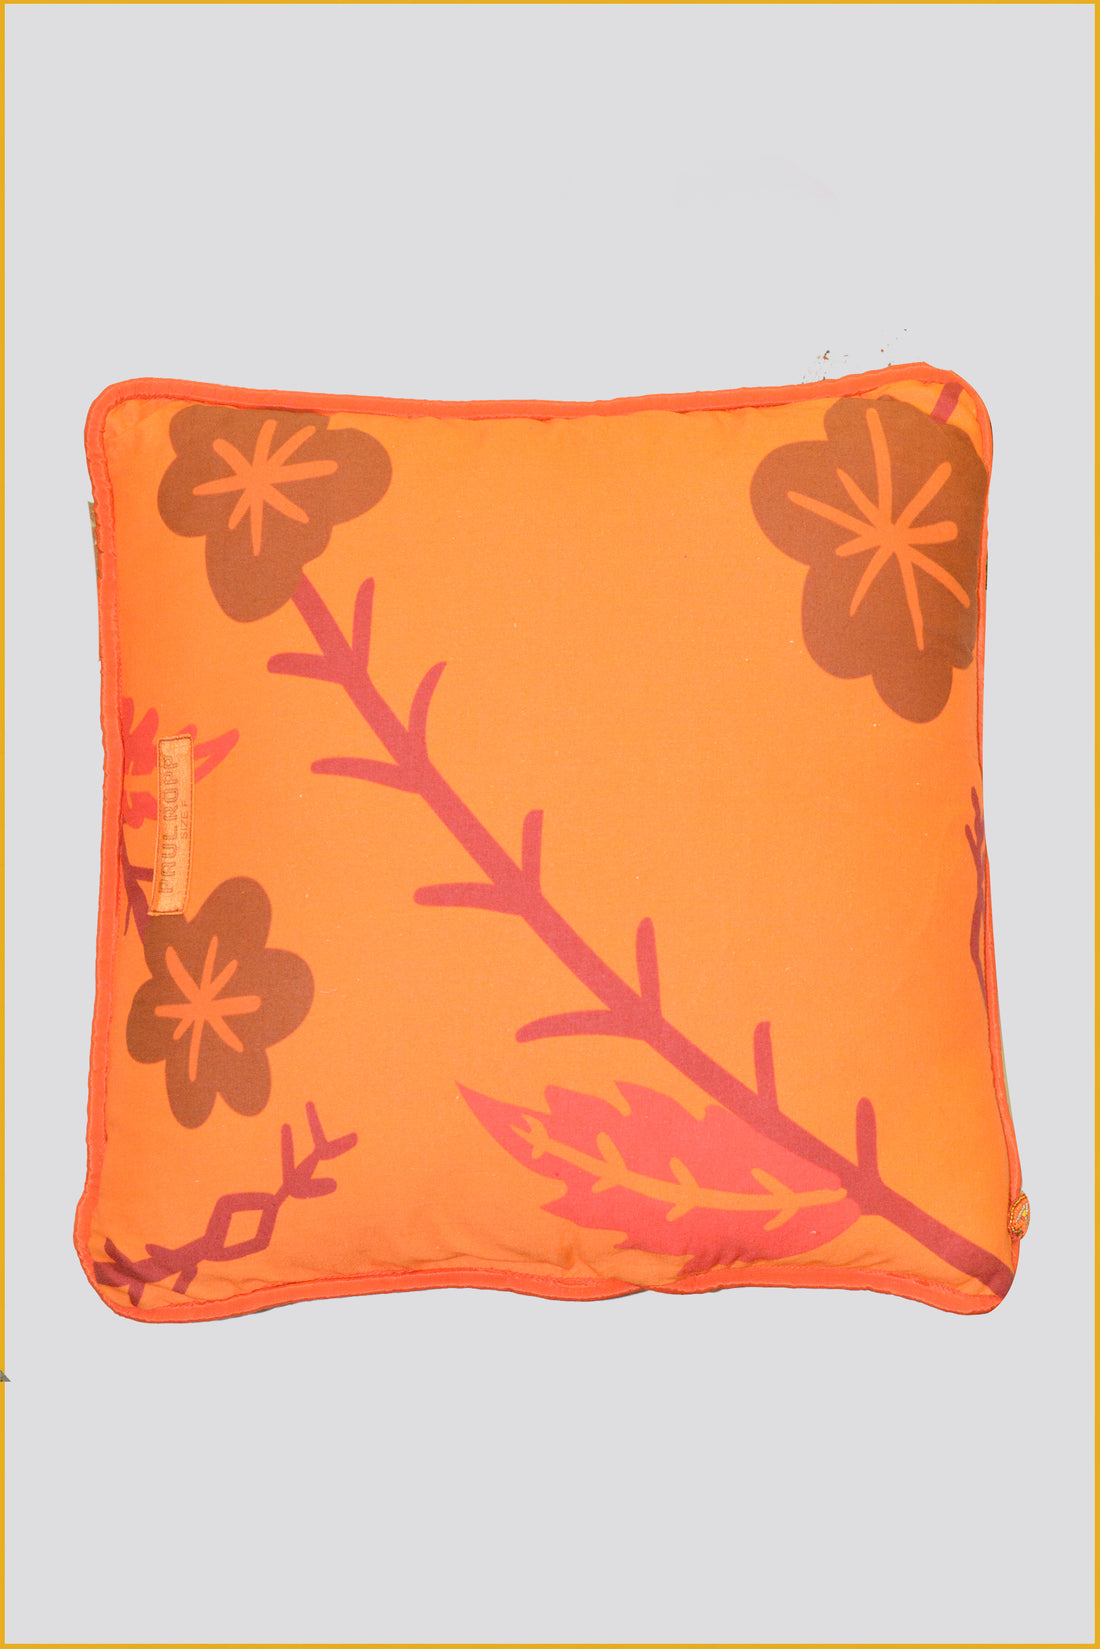 Savanna - Viscose Crepe Digital Print Pillow Cushion (7413897068740)